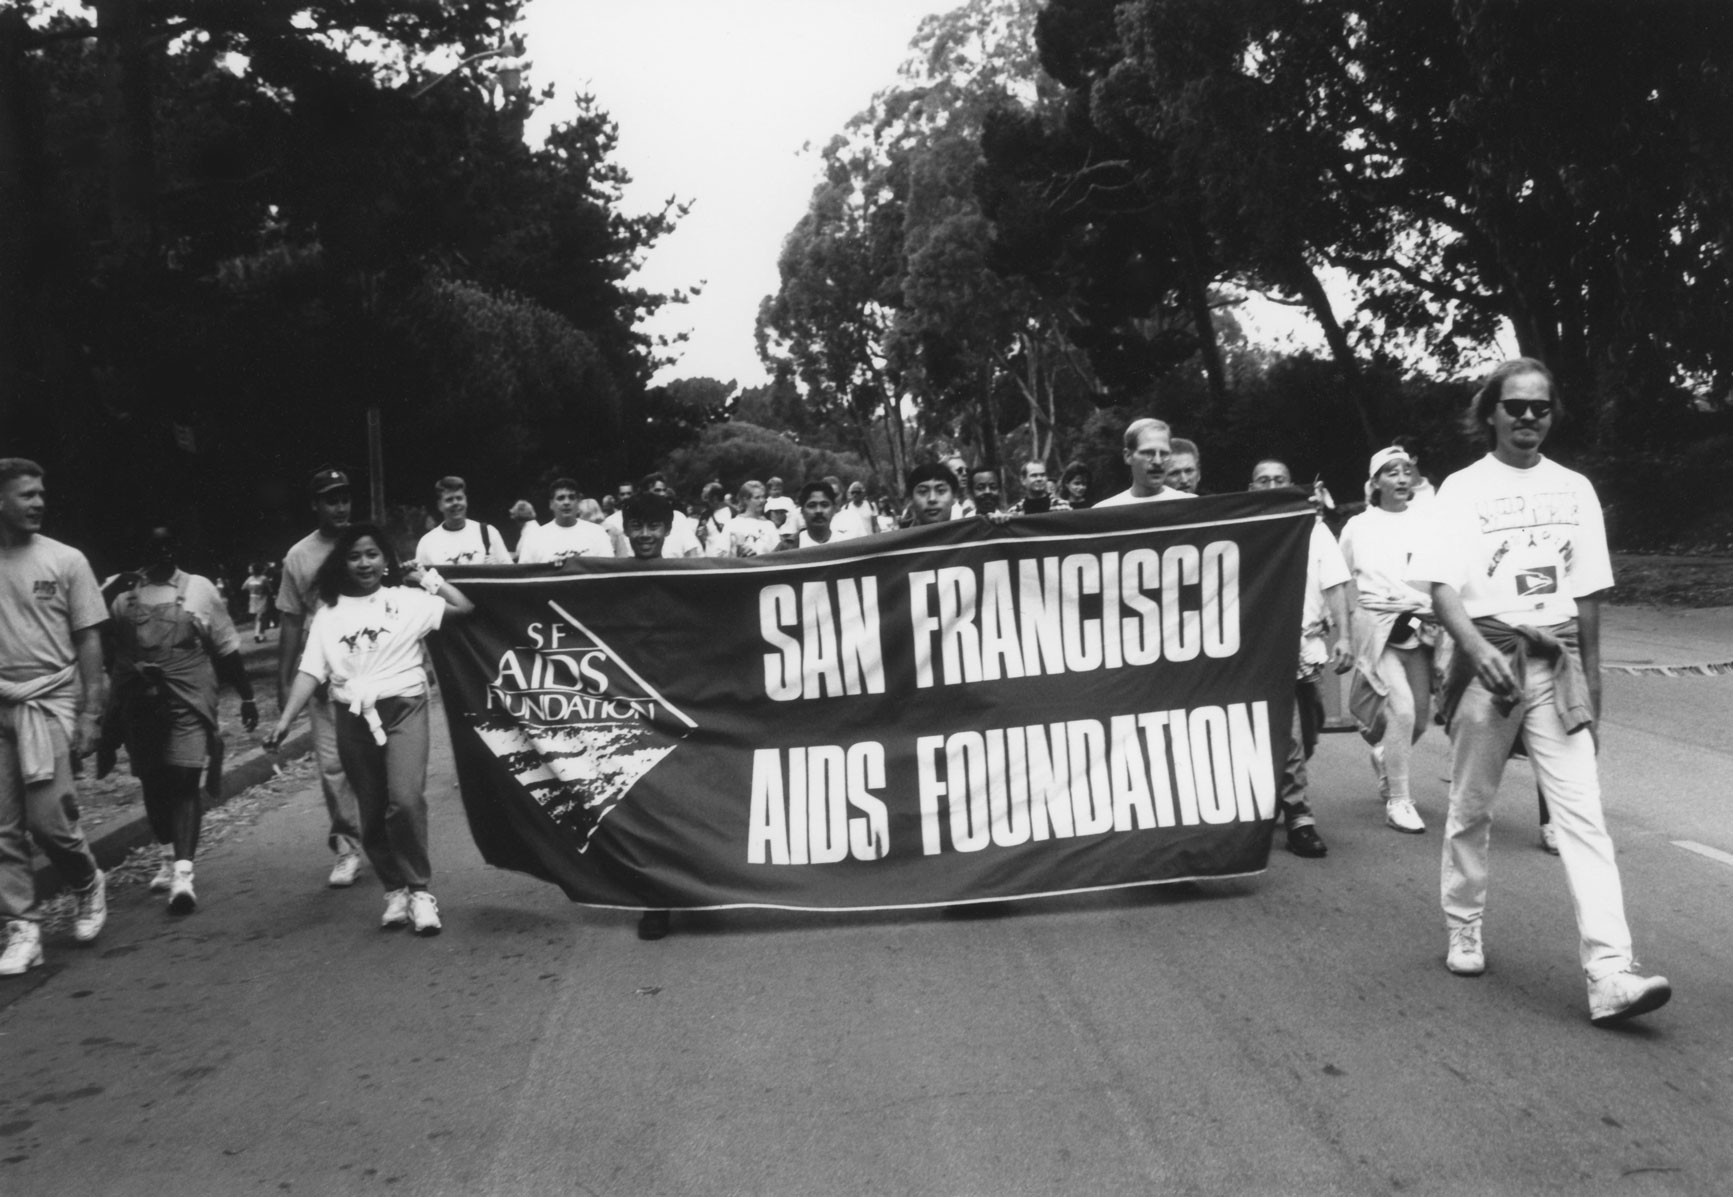 Photo courtesy of San Francisco AIDS Foundation, 1994